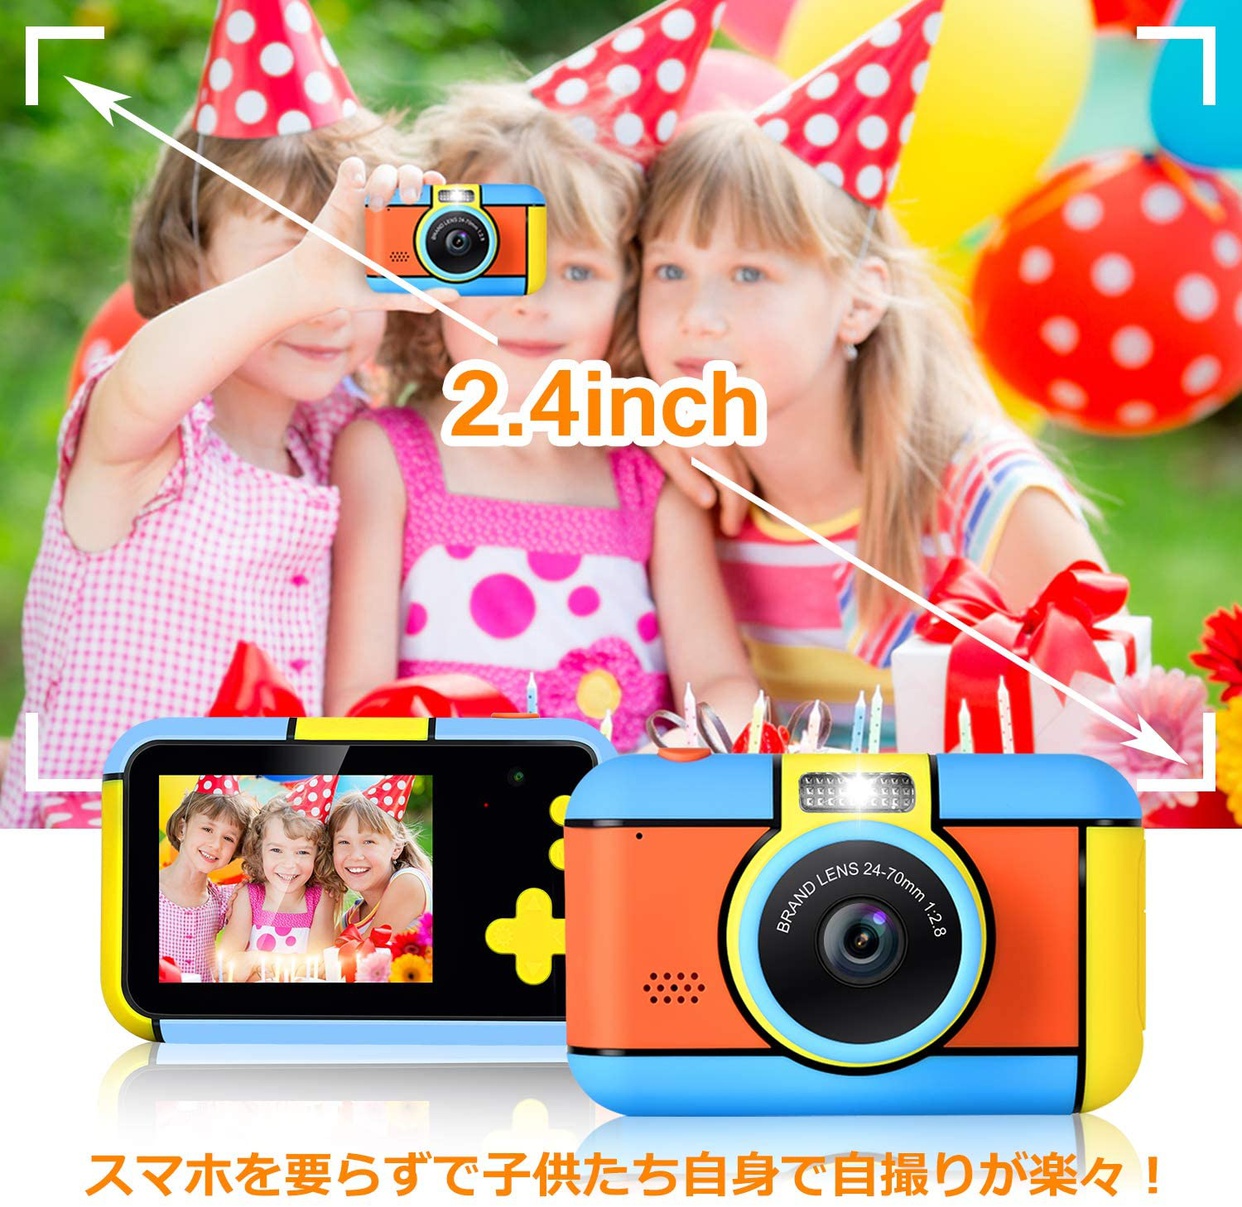 WisFox(ウィスフォックス) 子供用デジタルカメラの商品画像3 